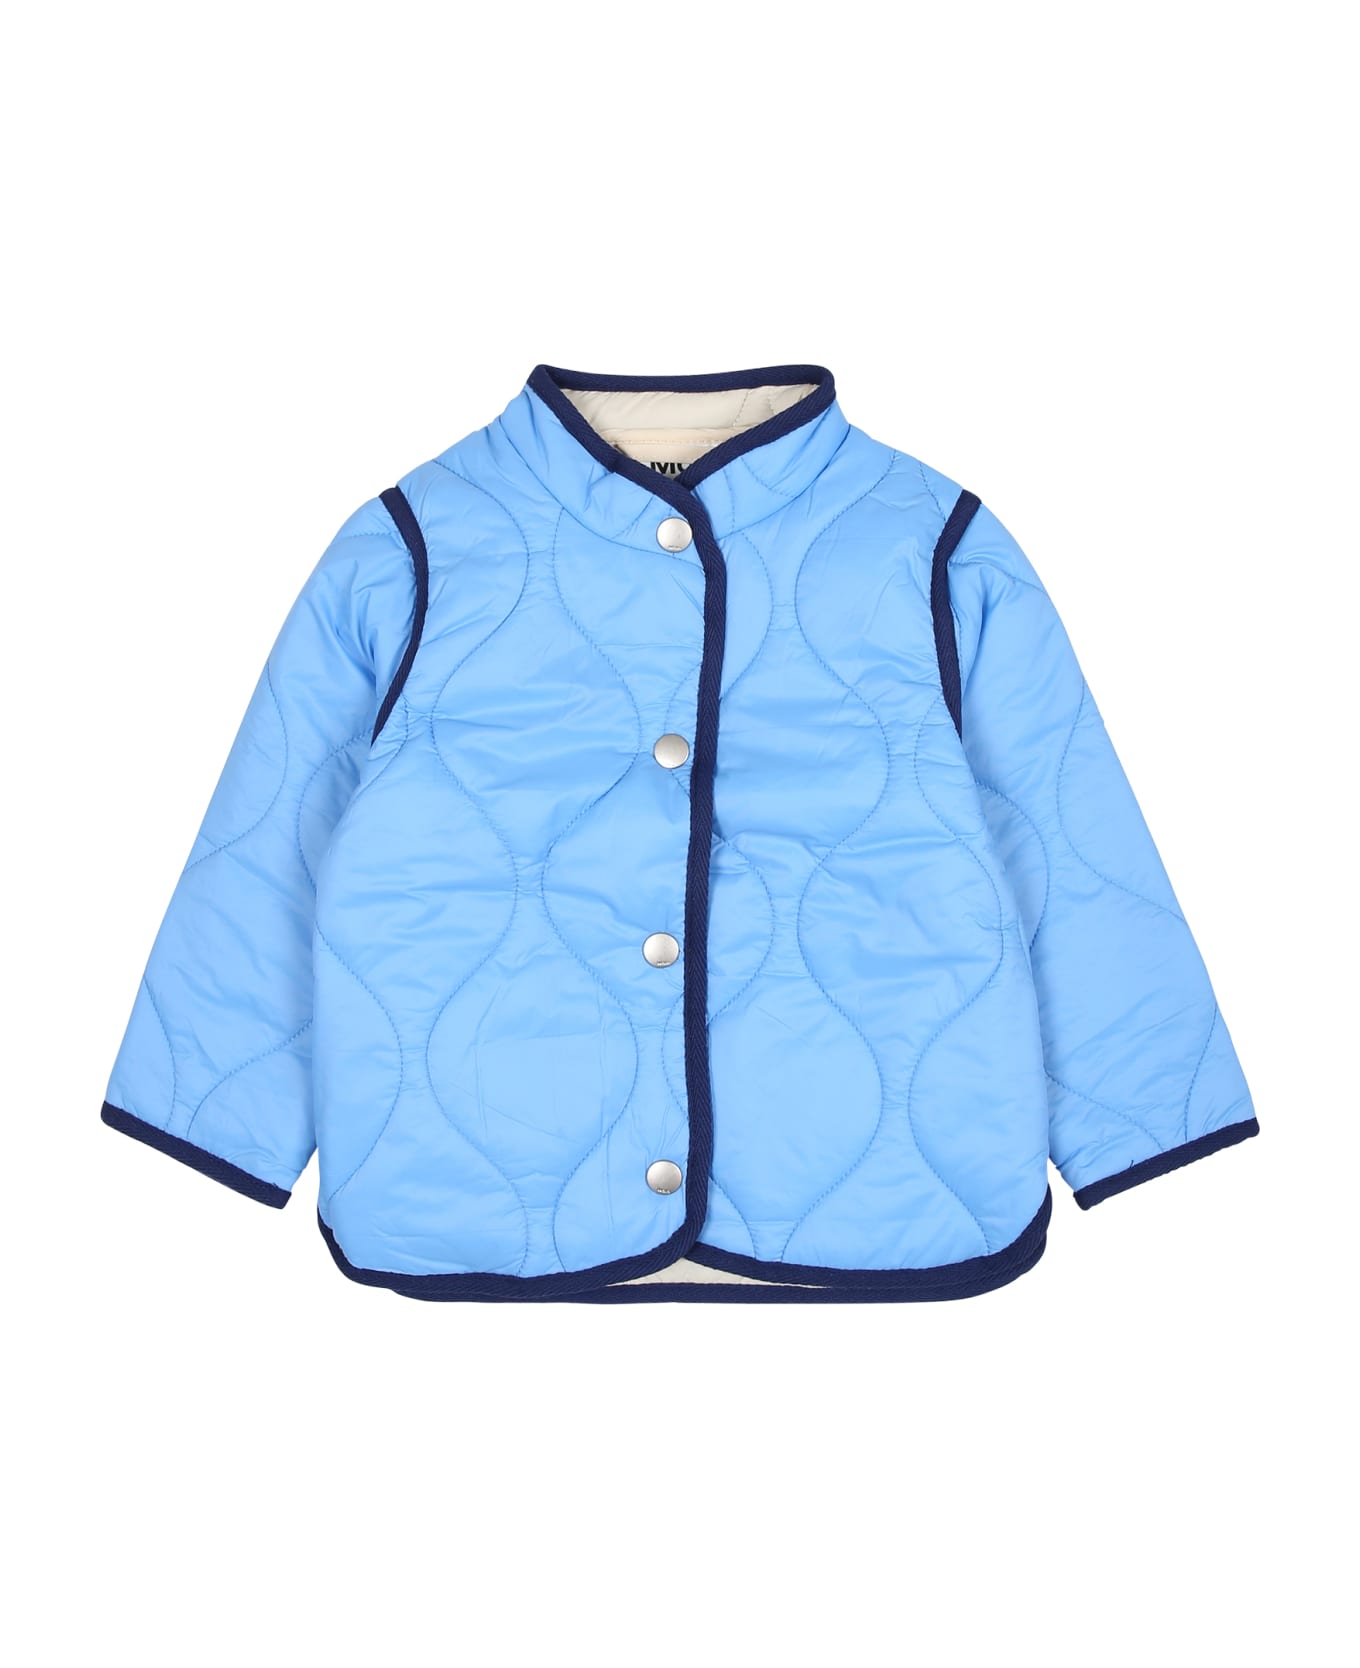 Molo Light Blue Down Jacket Harrie For Baby Boy - Light Blue